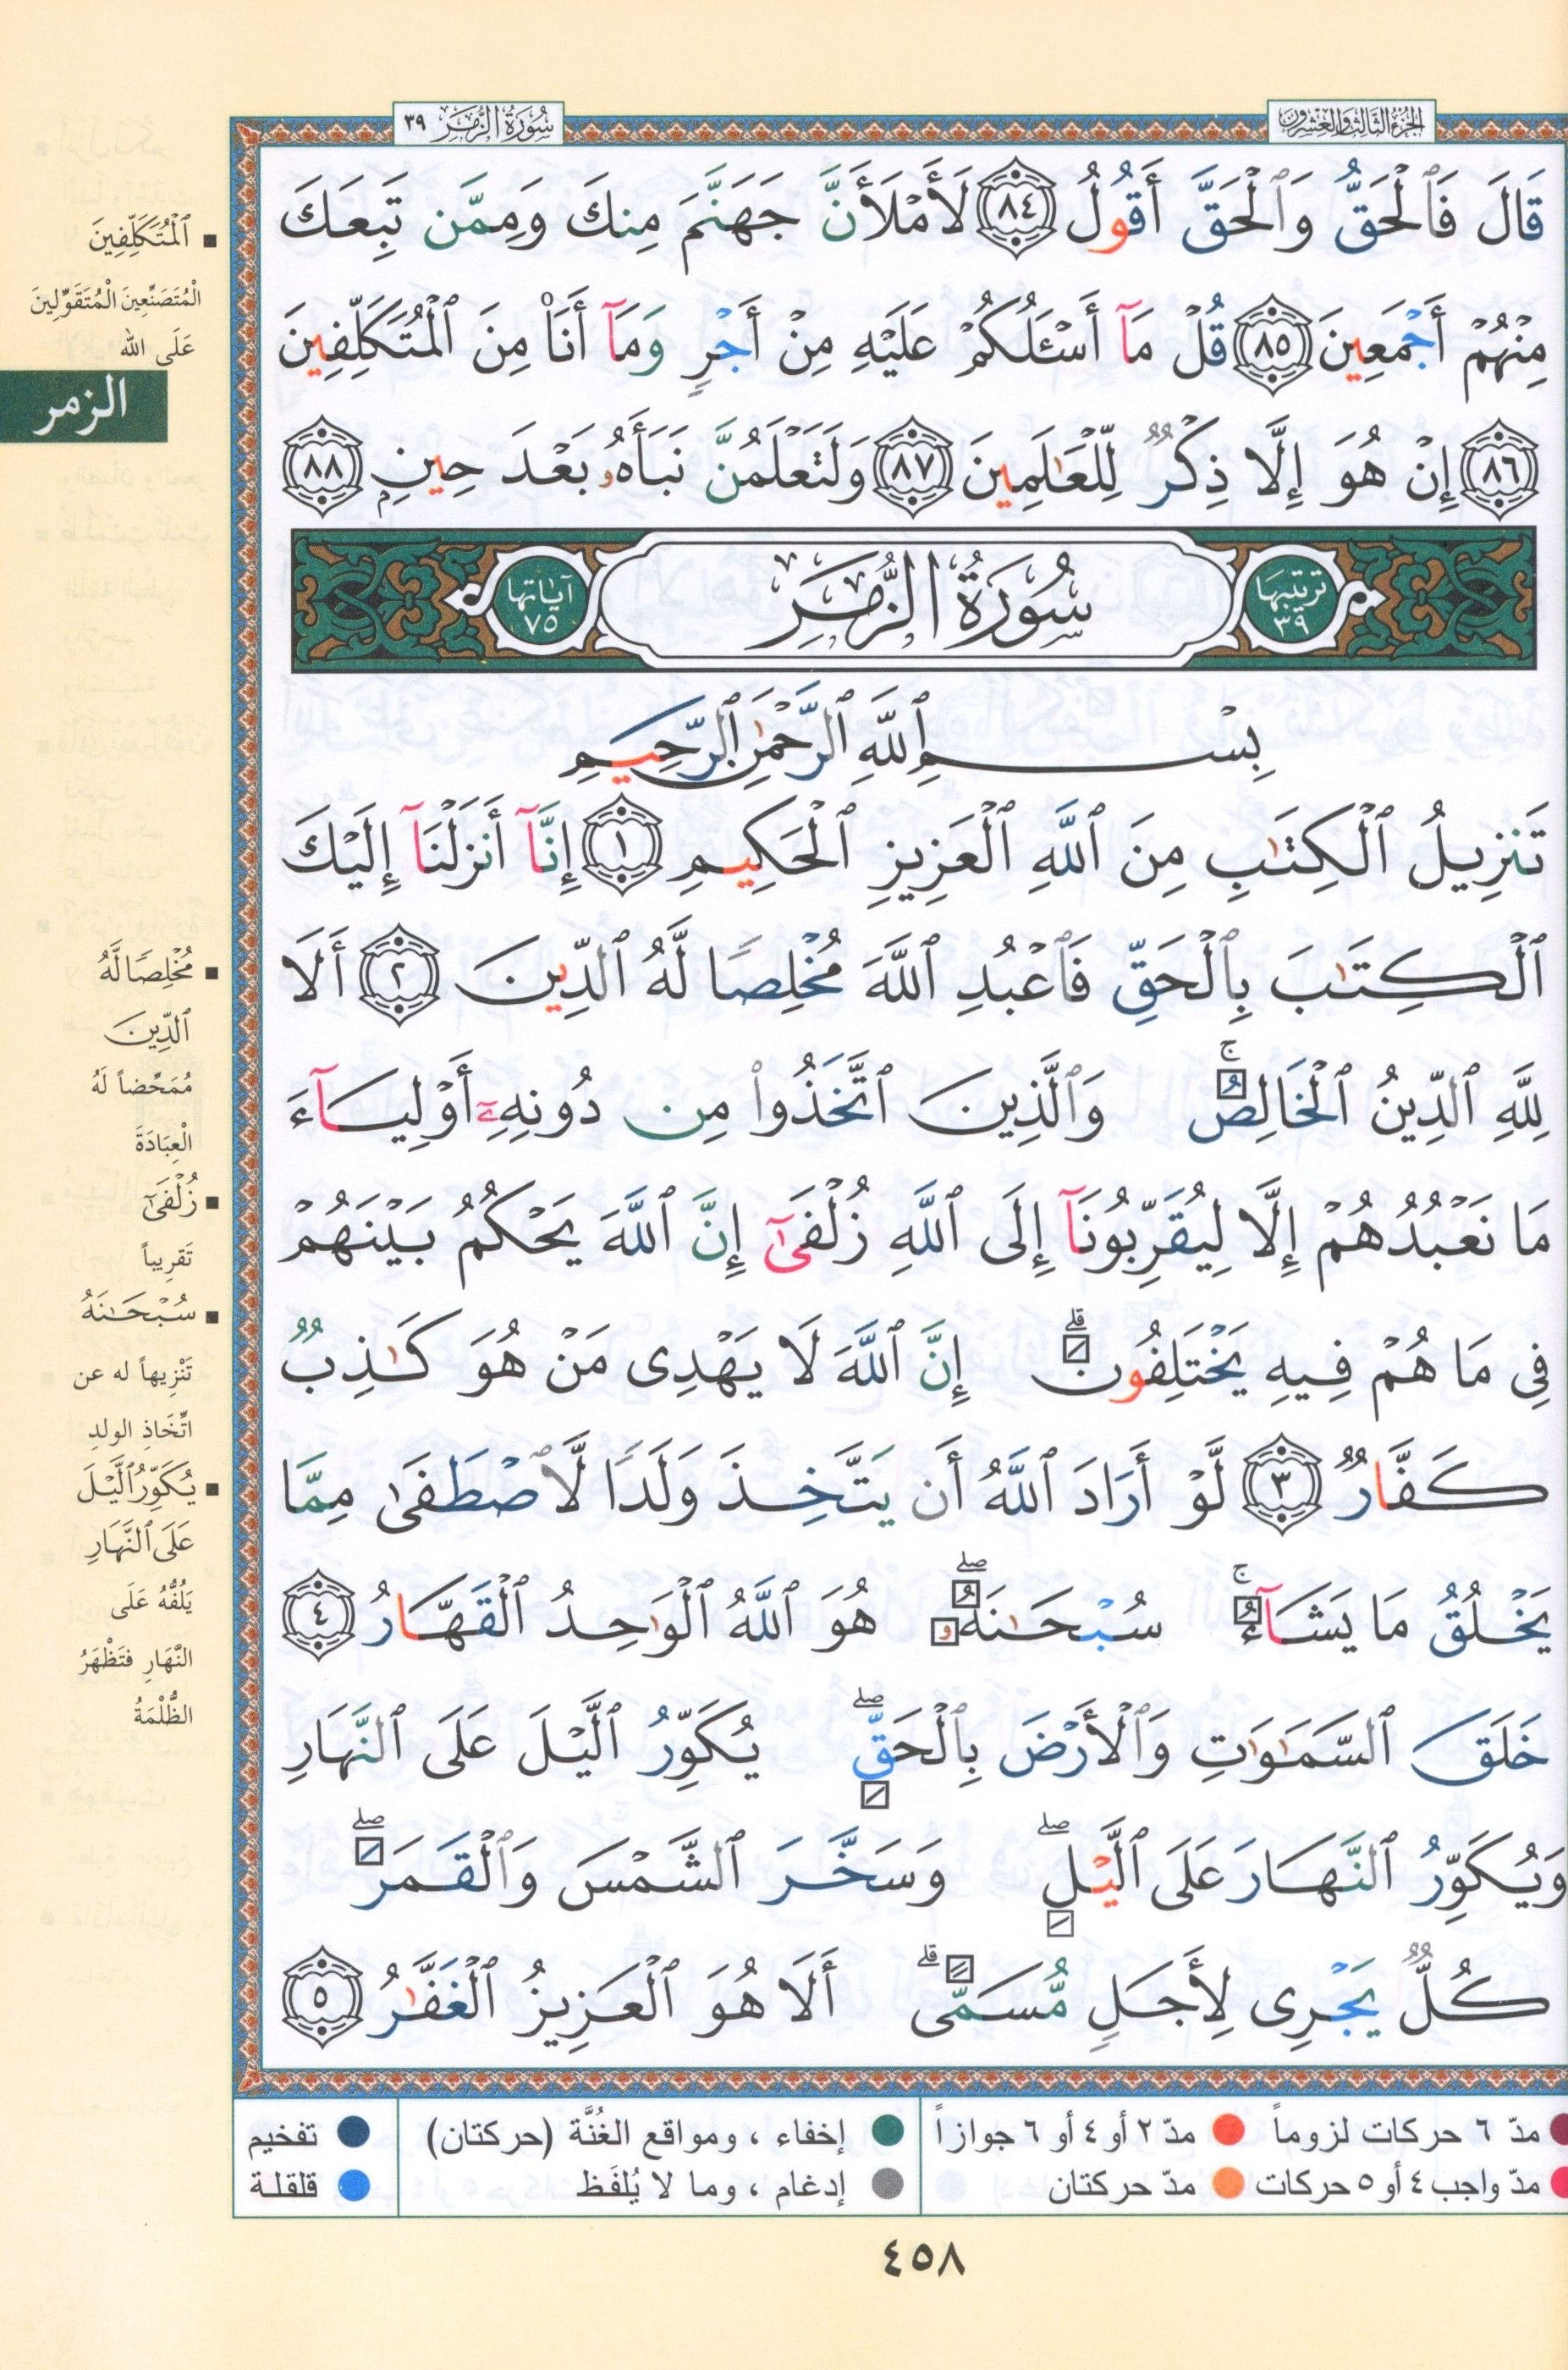 Tajweed Quran without Case 7" x 9"